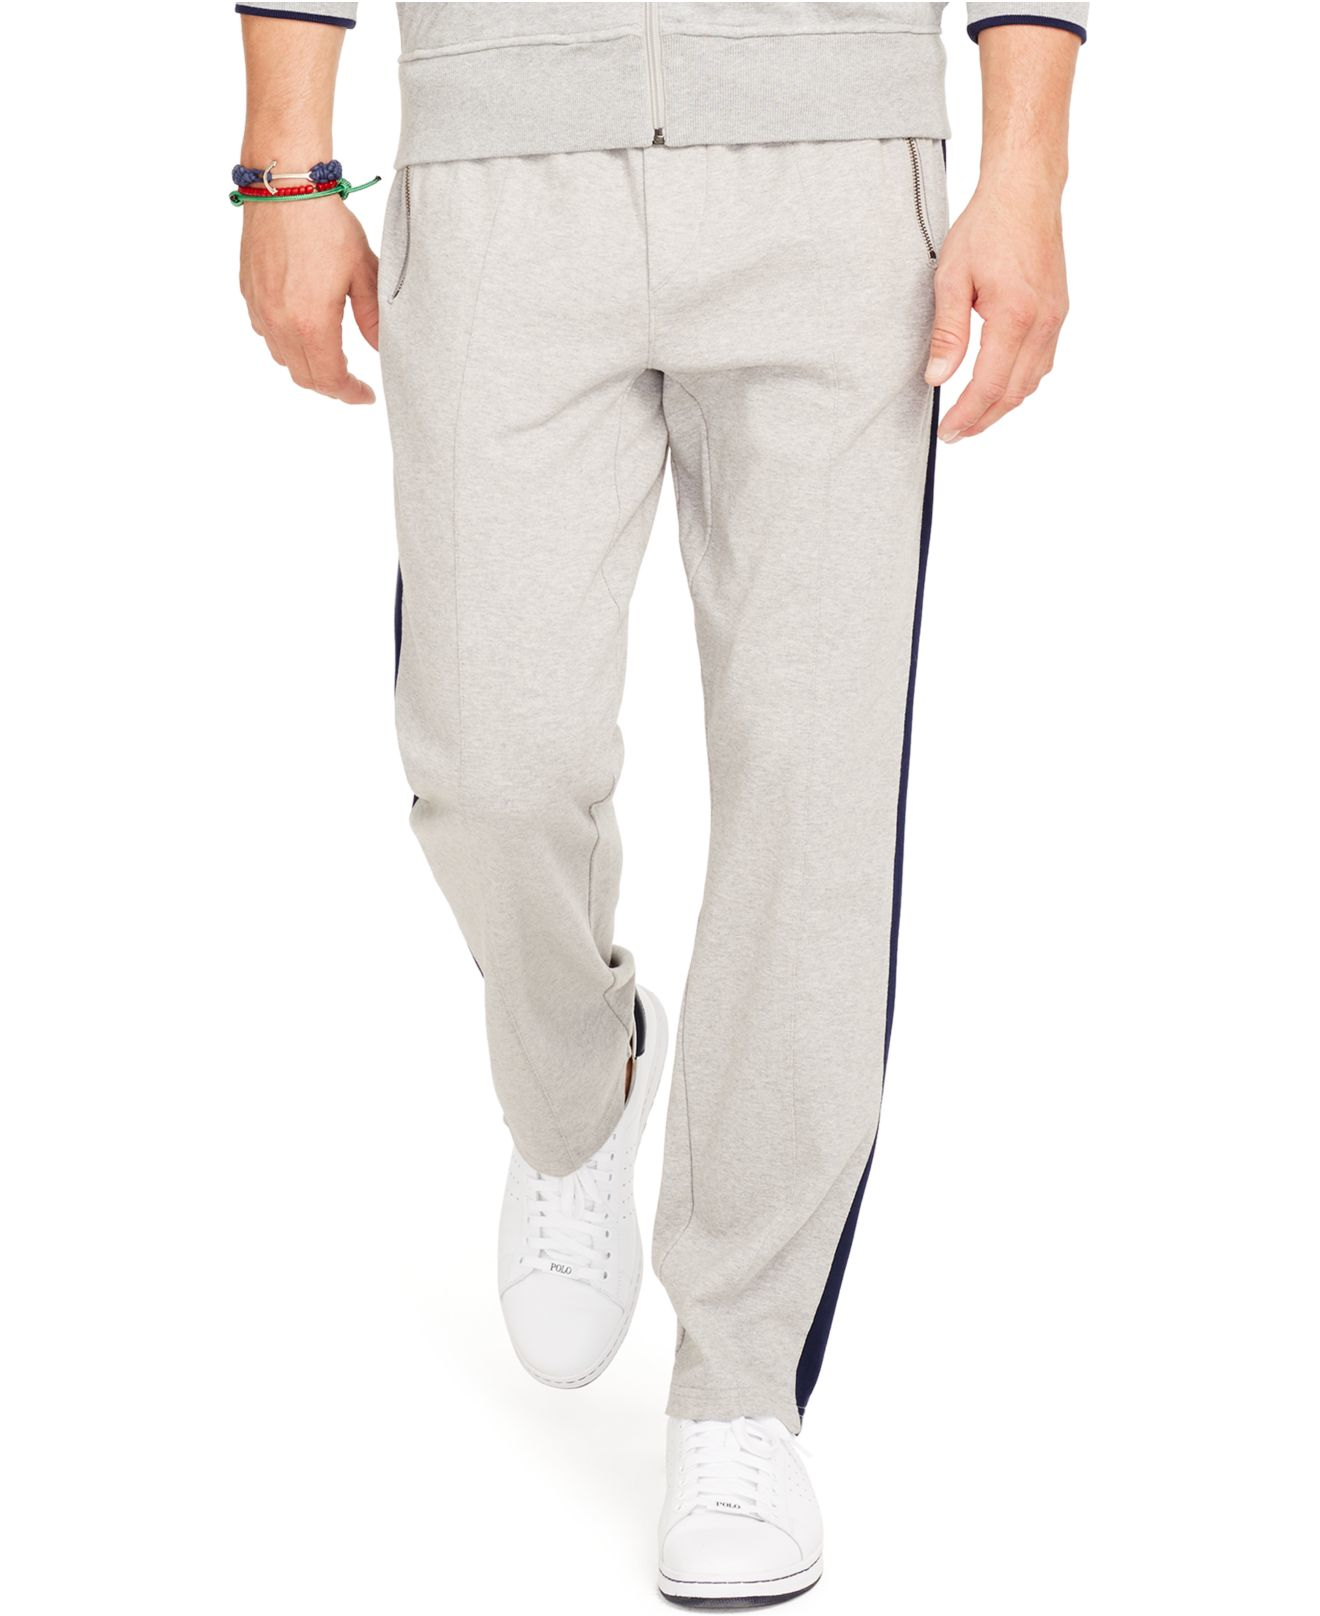 Lyst - Polo Ralph Lauren Interlock Track Pants in Gray for Men